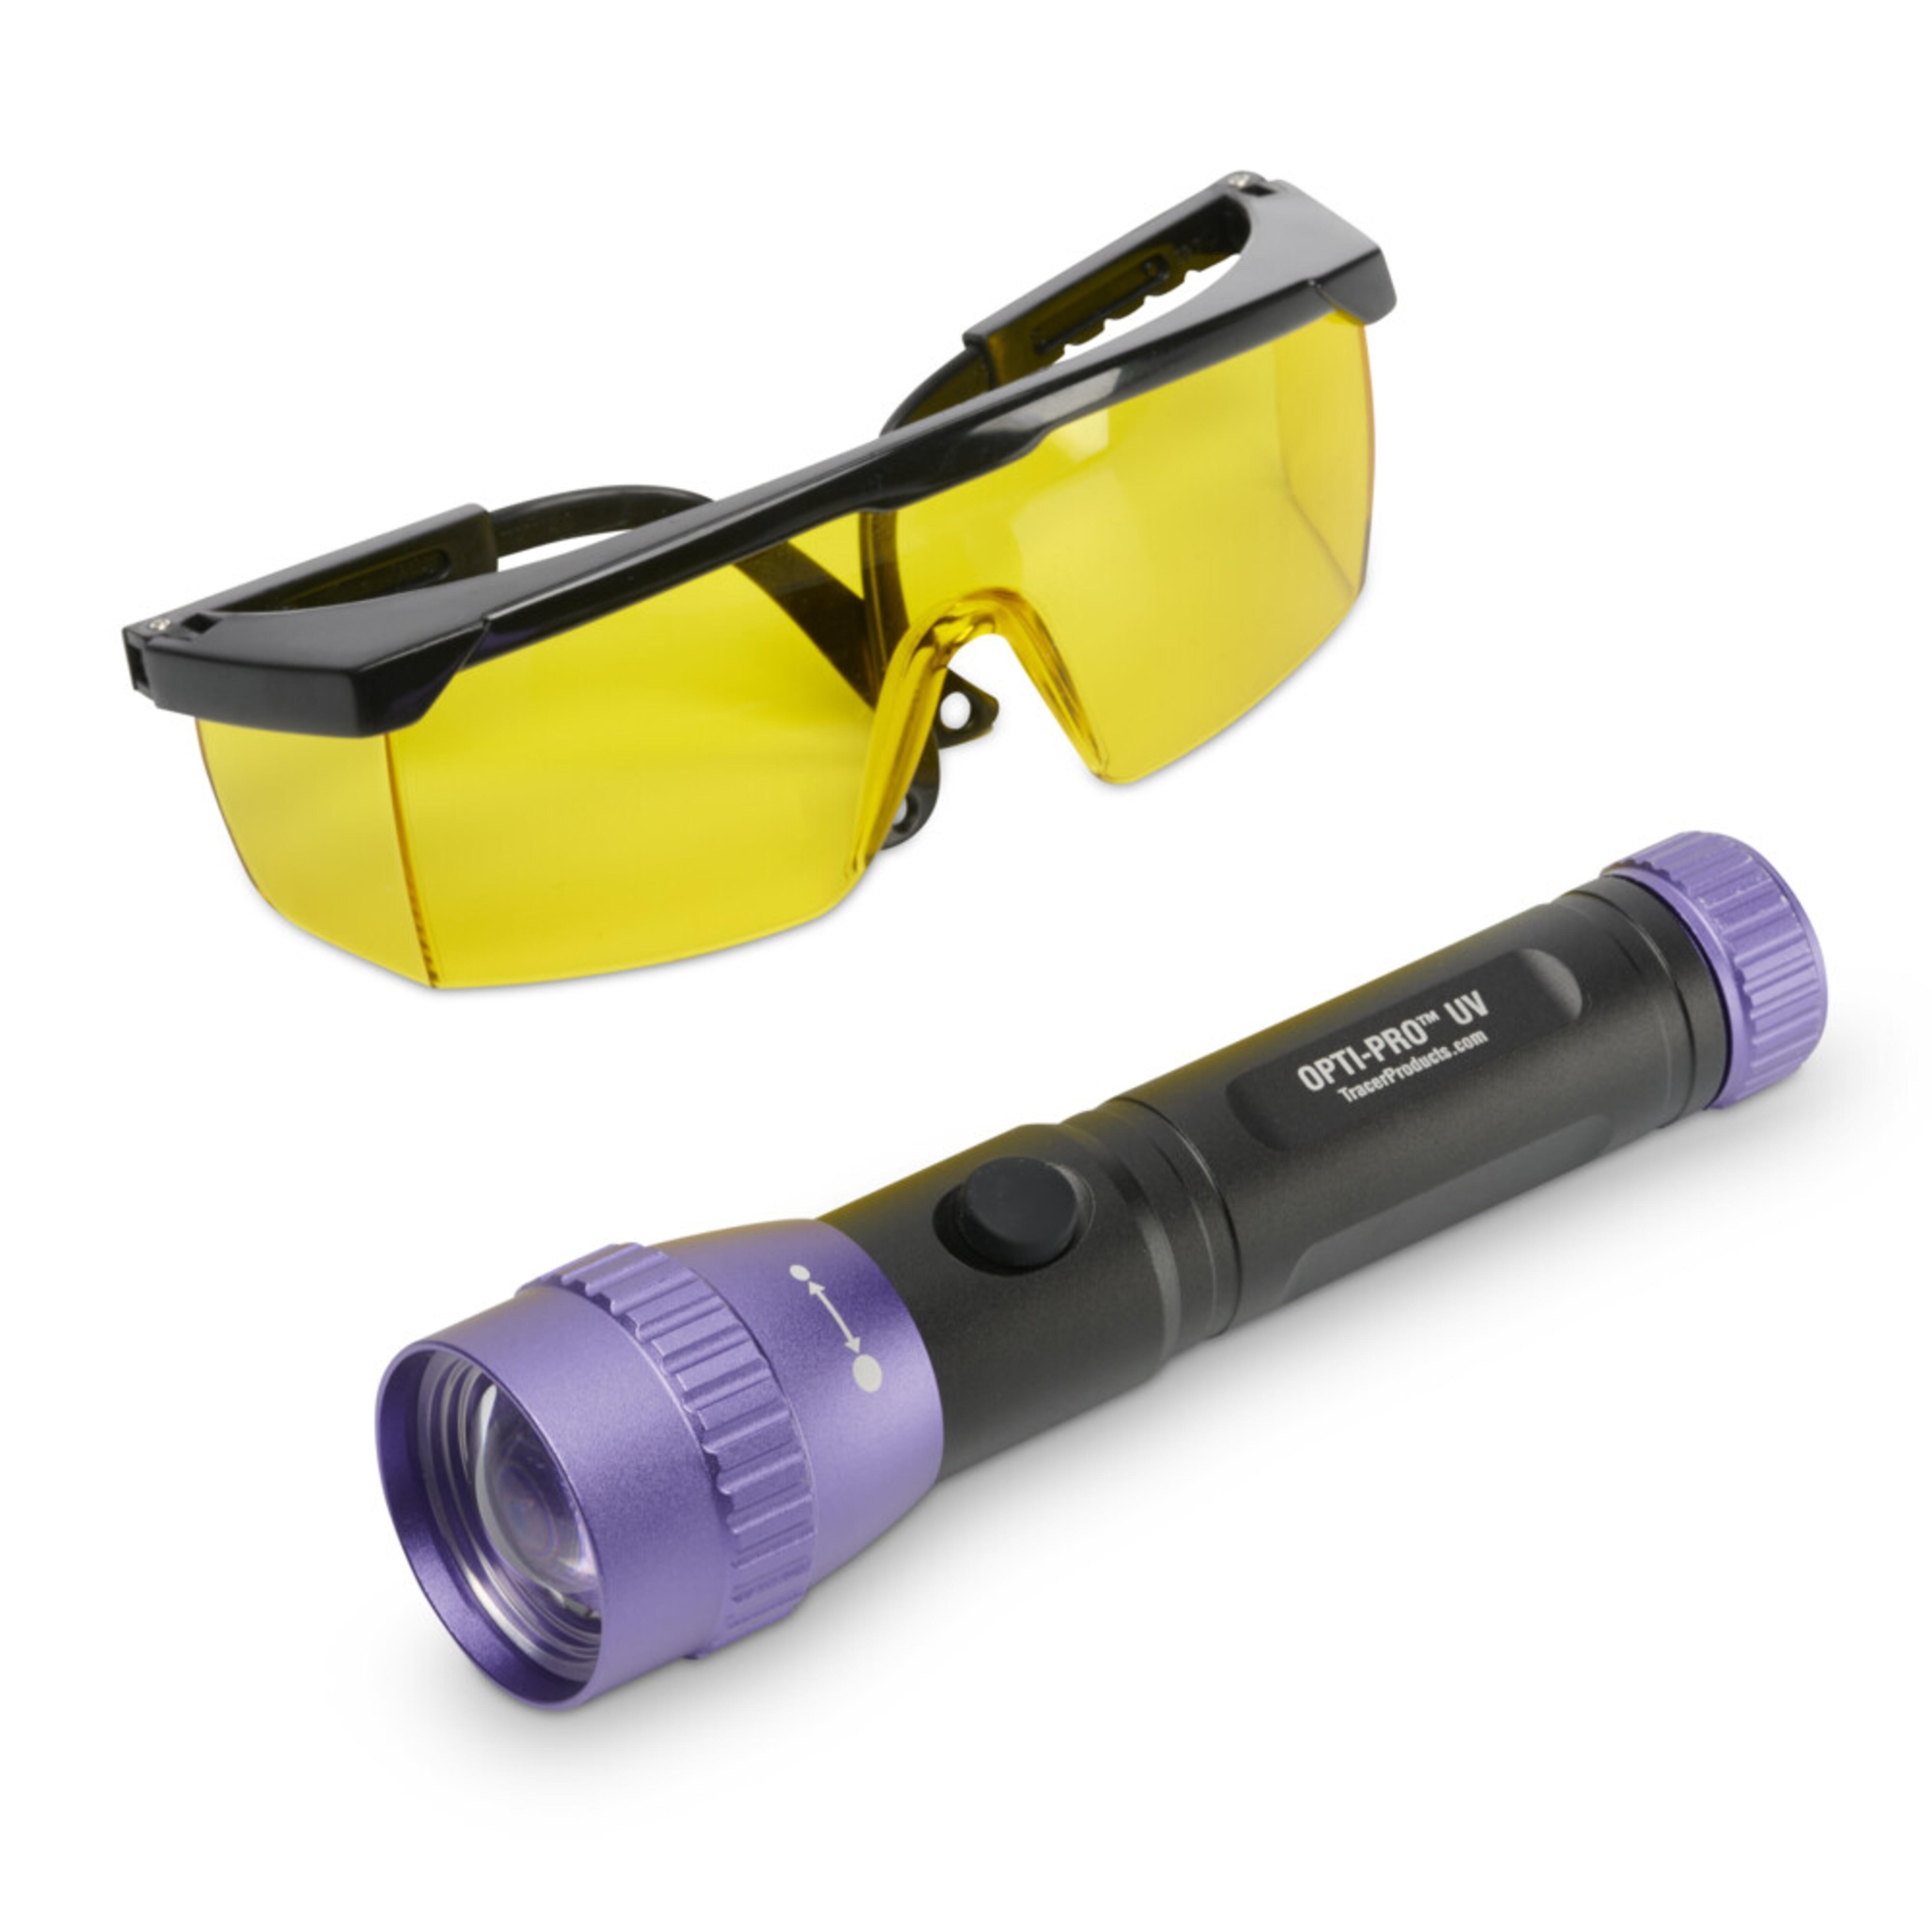 UV-lecksuchset nachfüllinjektor LED UV lecksuchlampe & schuzbrille adaptador 